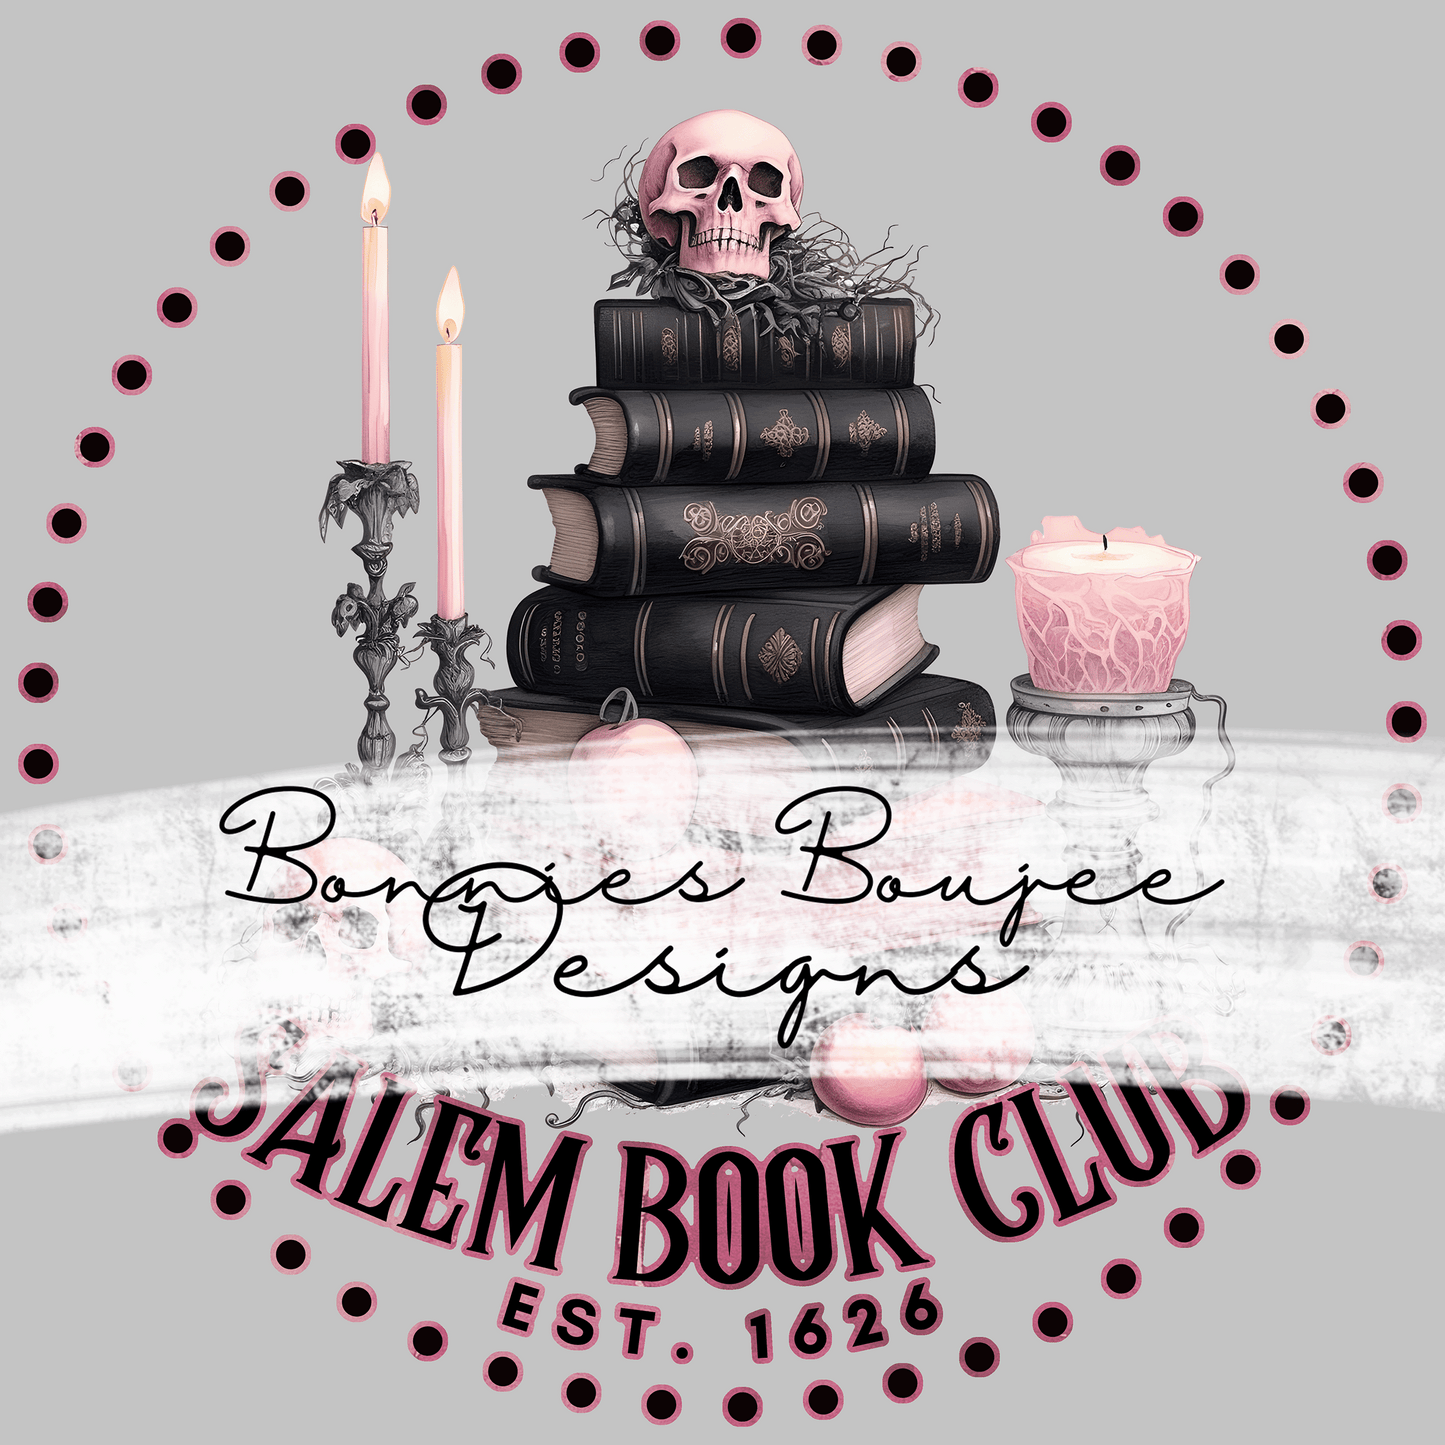 Salem Book Club Bundle Purchase